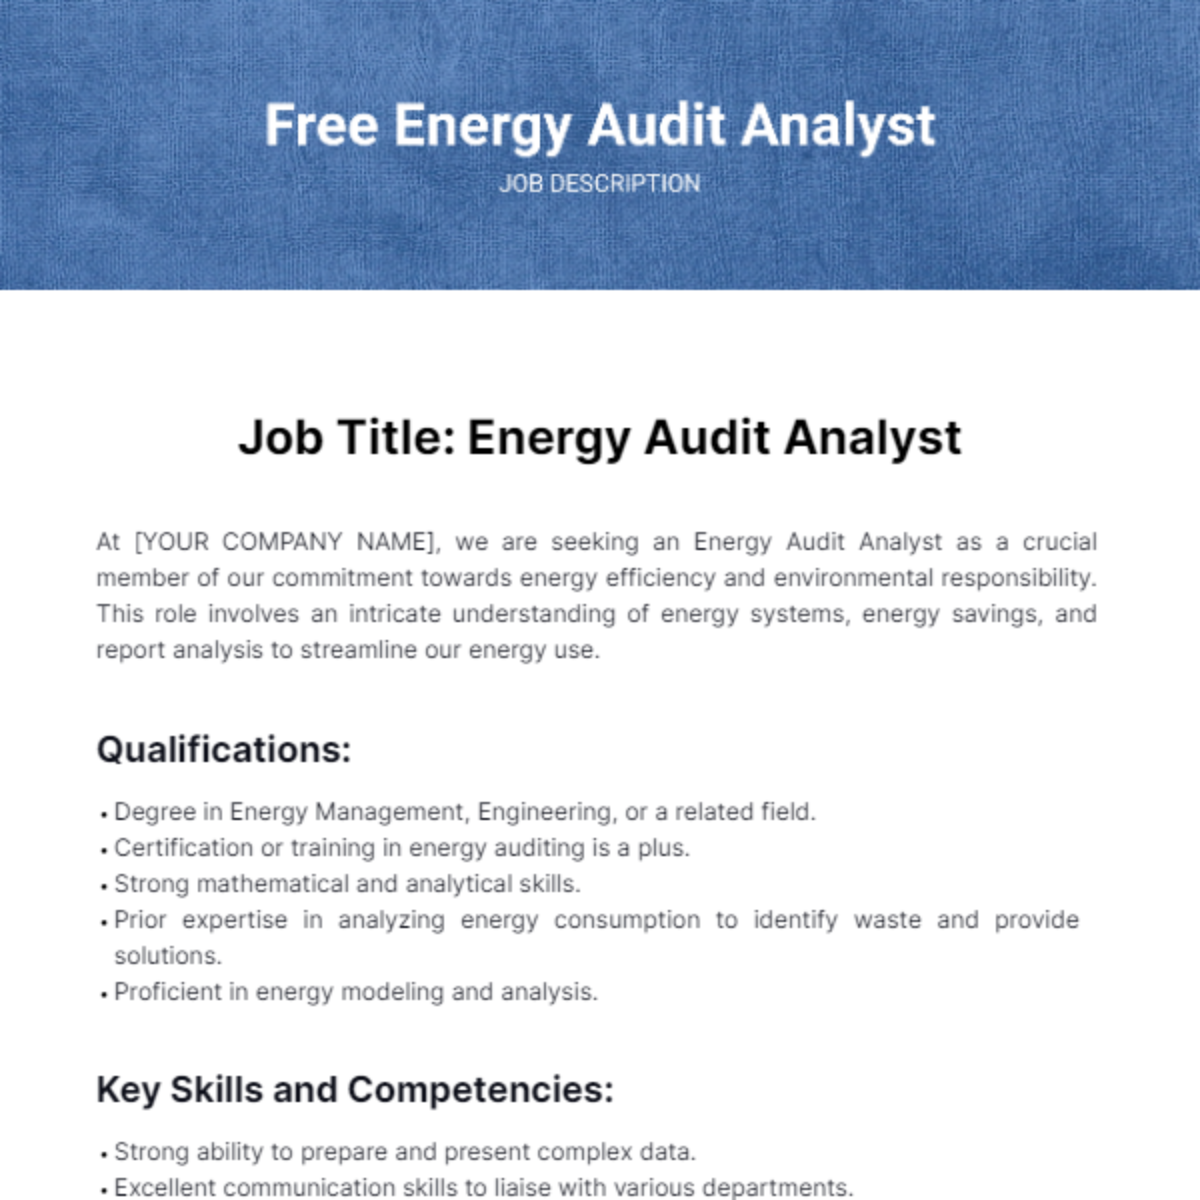 Free Energy Audit Analyst Job Description Template